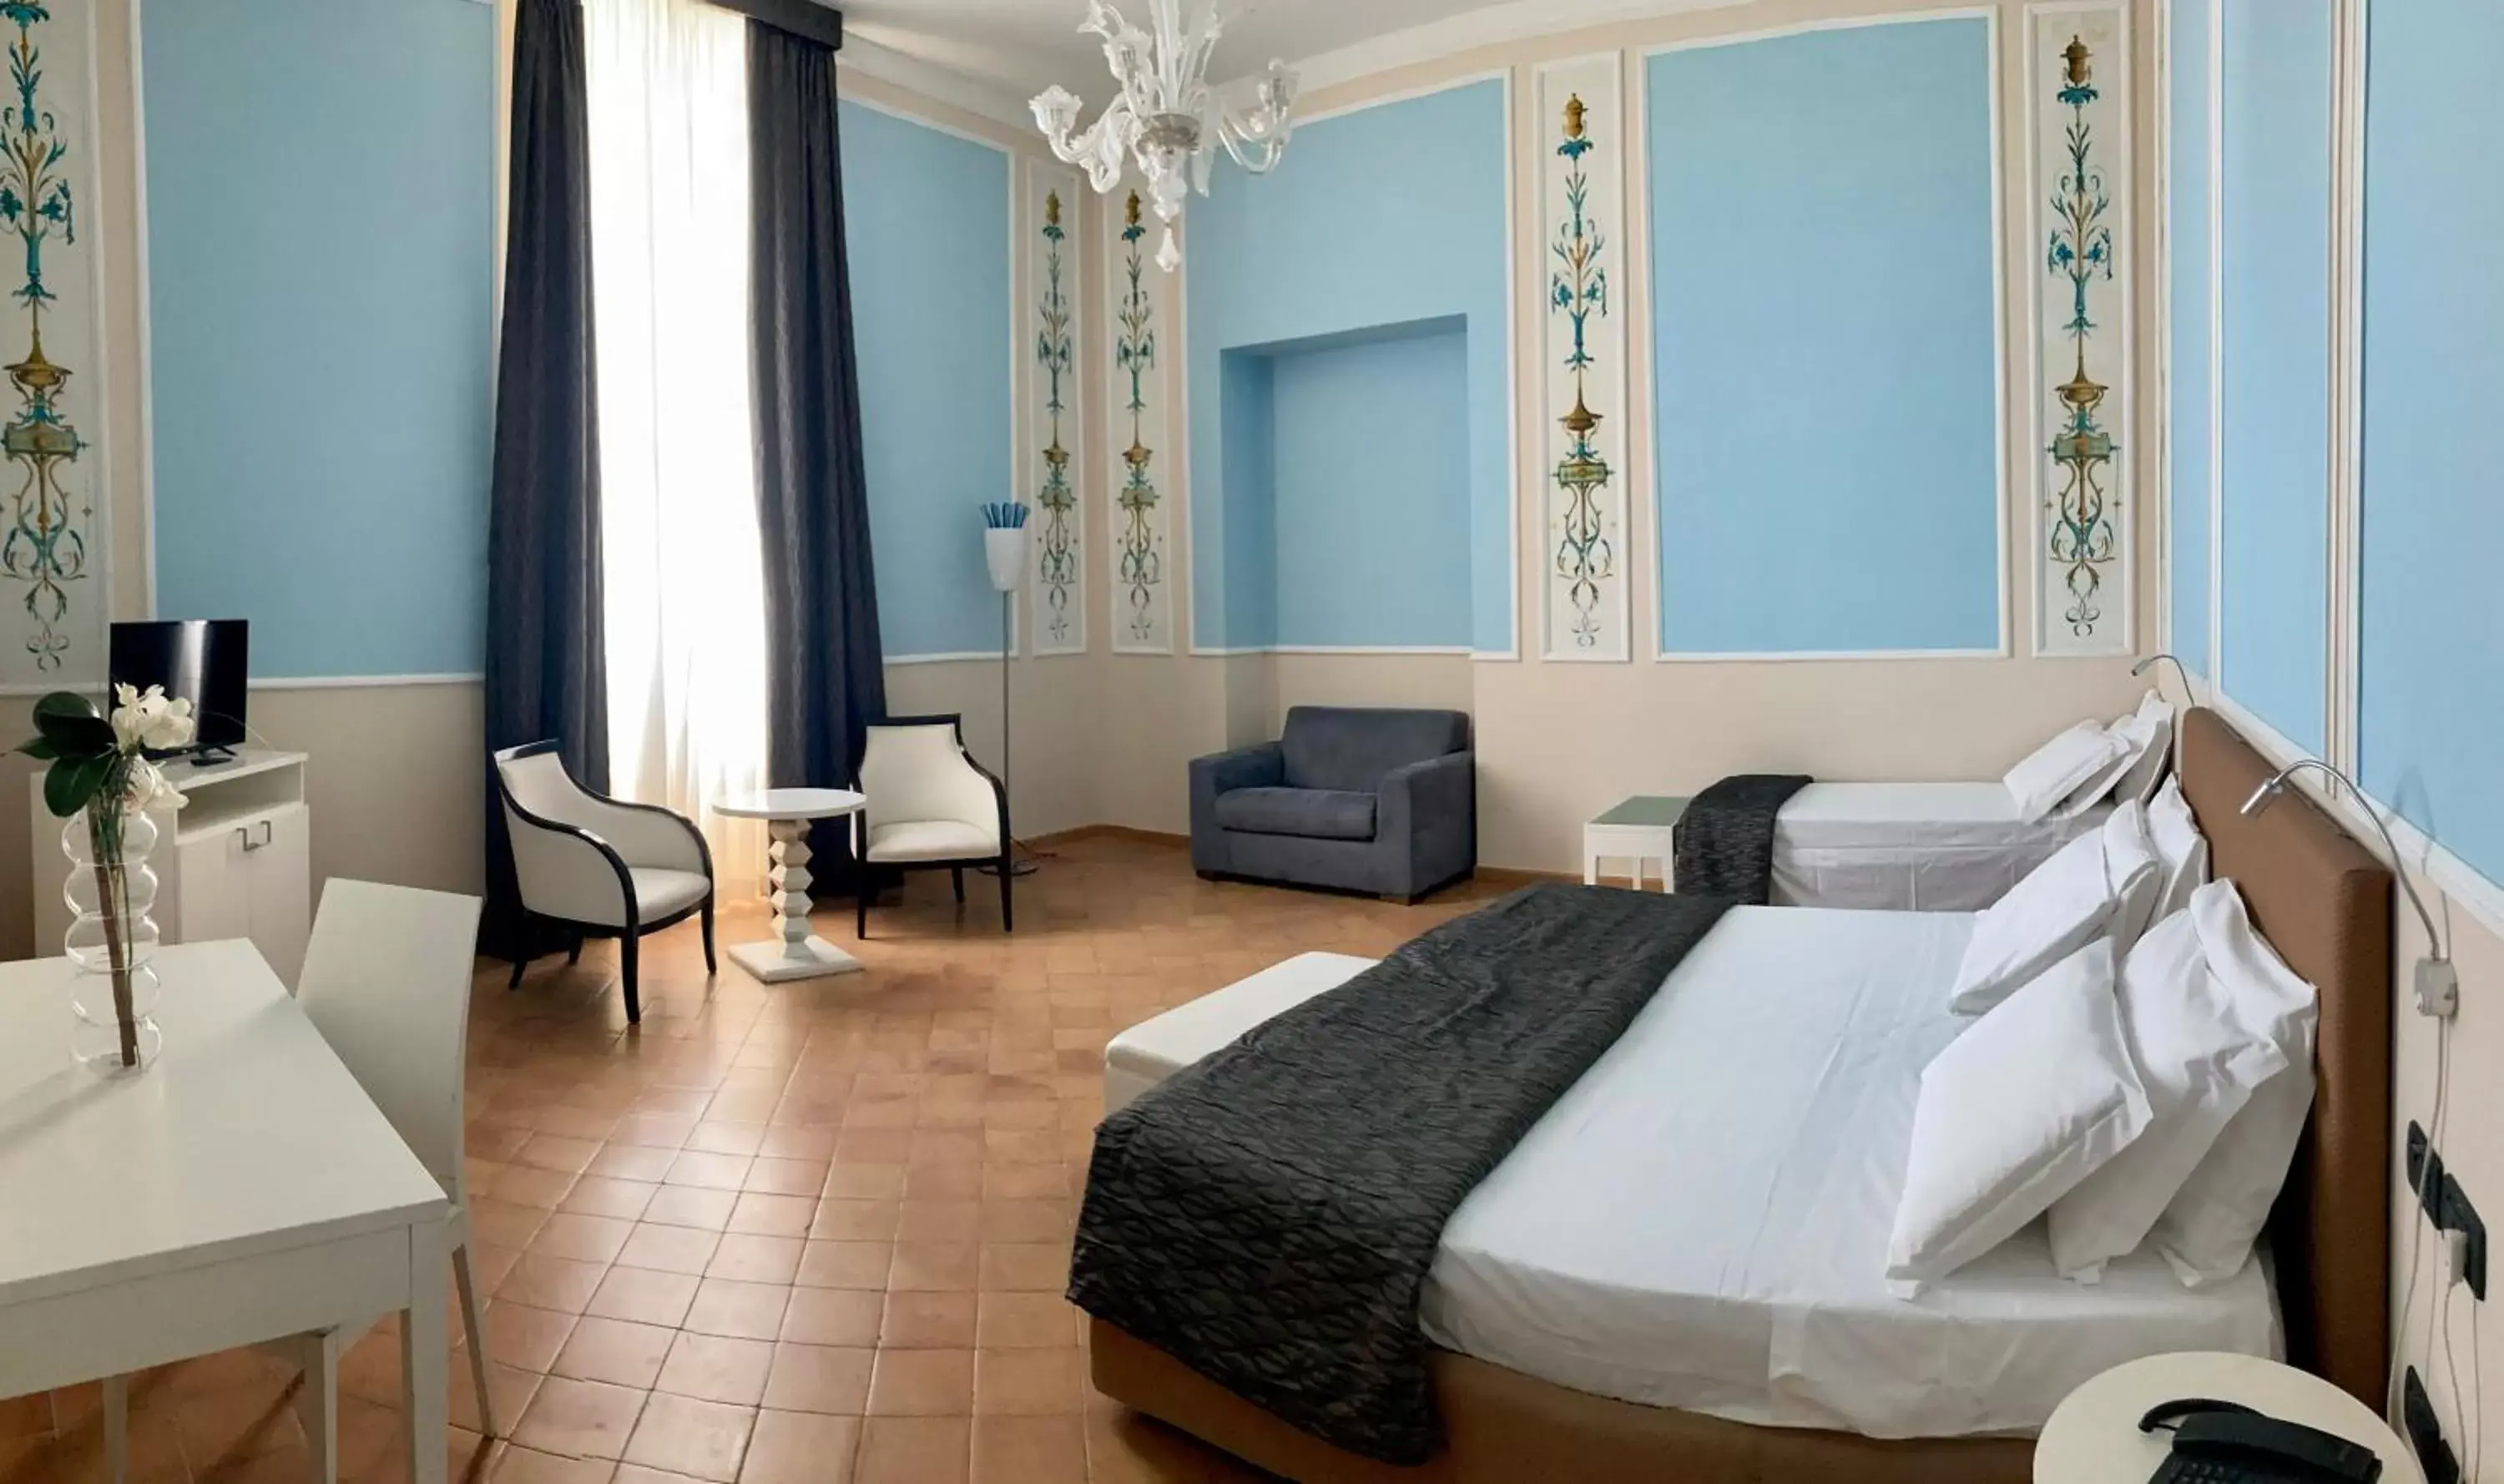 Photo of the whole room in Miglio d'Oro Park Hotel